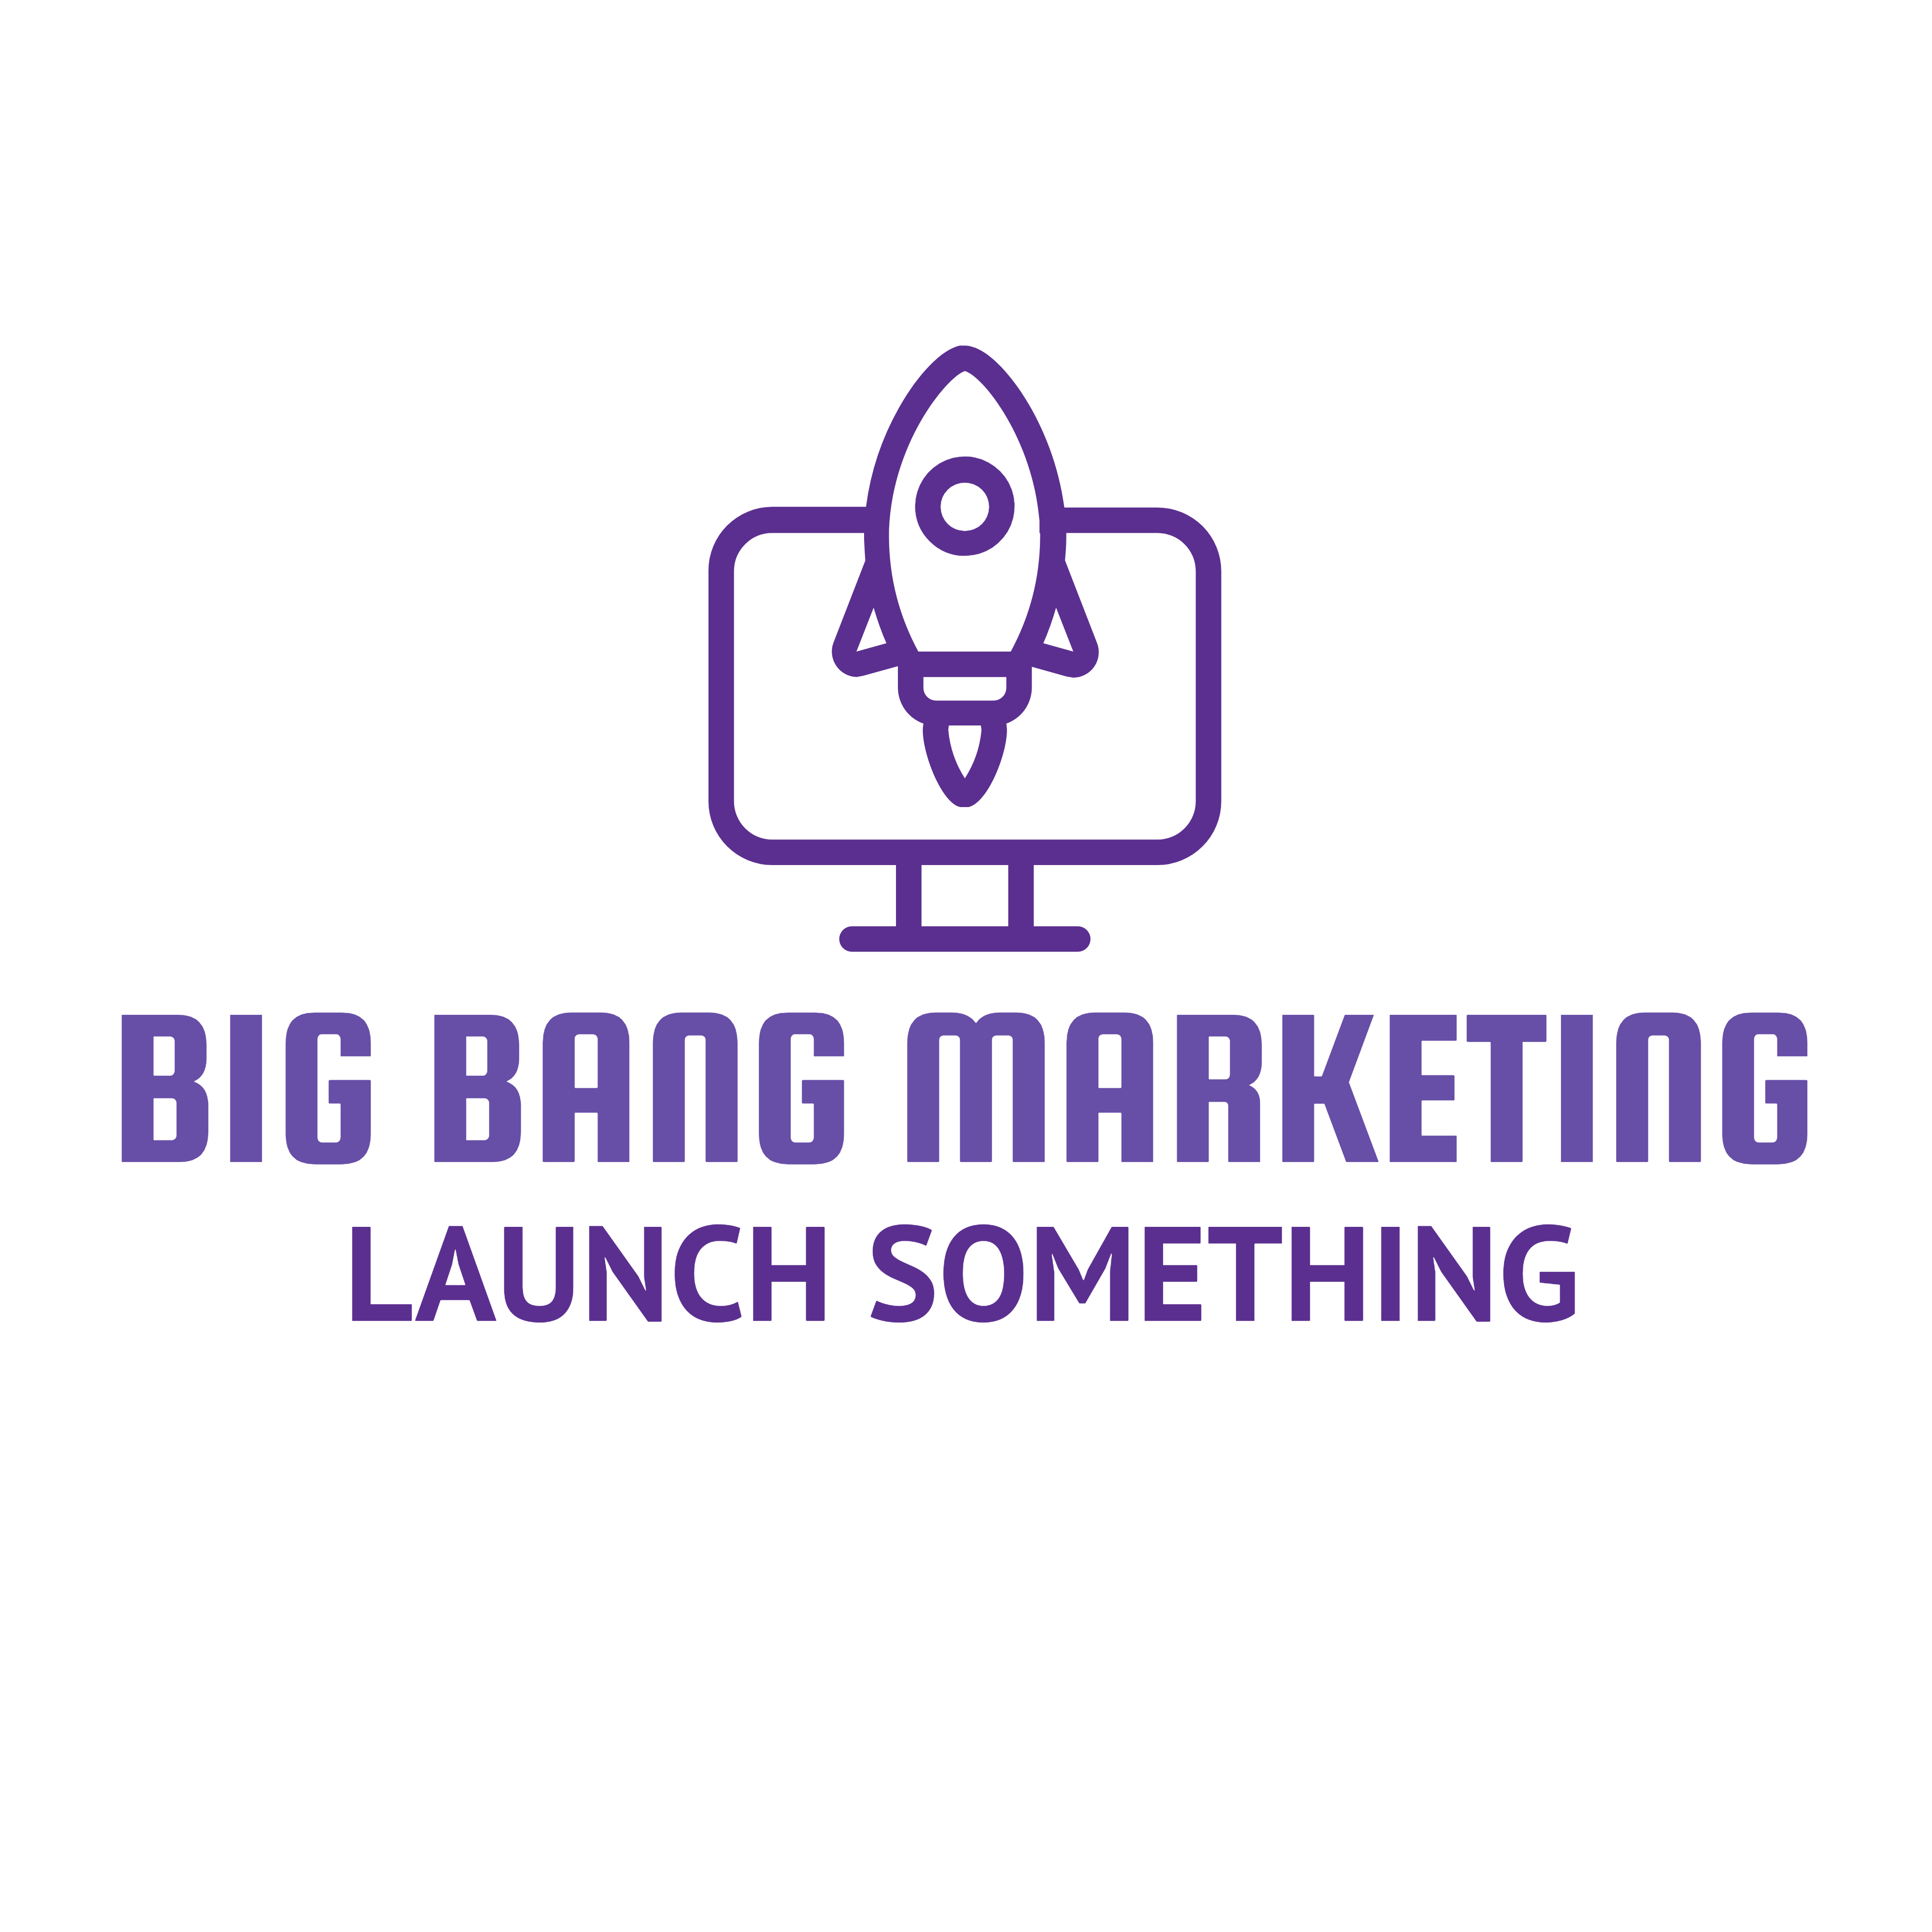 Top Search Engine Optimization Business Logo: Big Bang Marketing